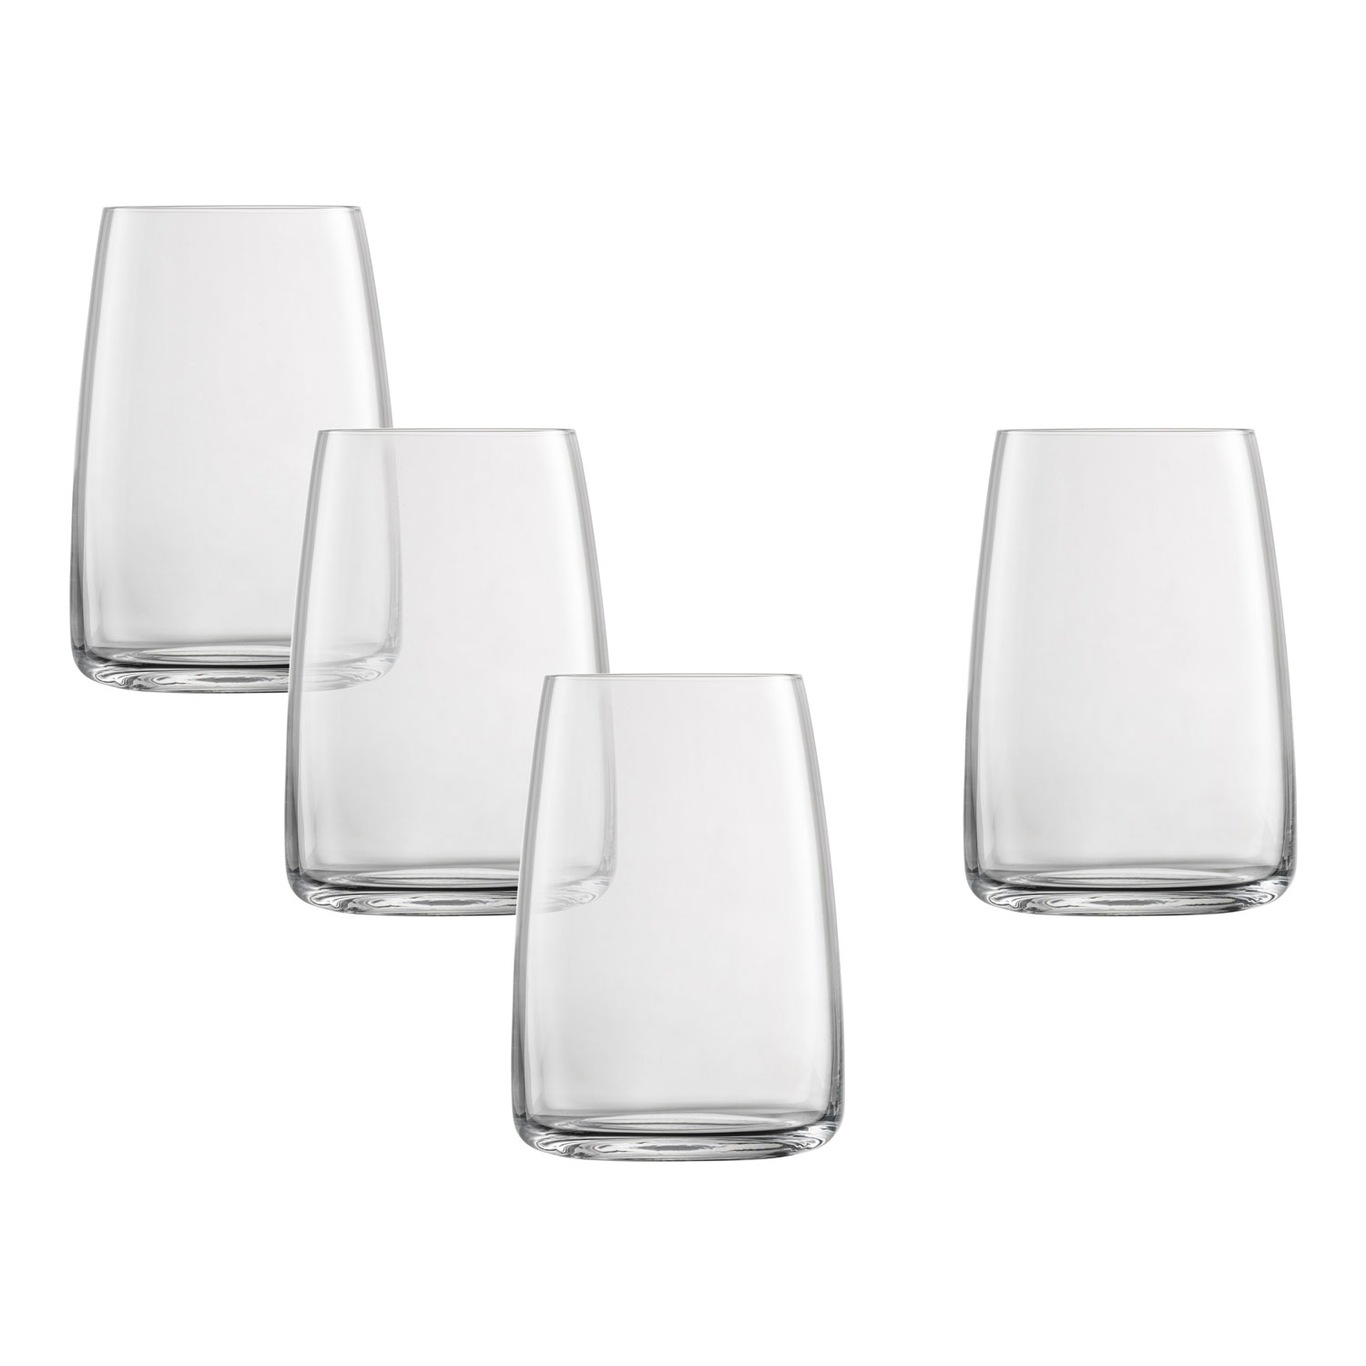 https://royaldesign.com/image/2/zwiesel-vivid-senses-drinking-glass-50-cl-4-pack-0?w=800&quality=80